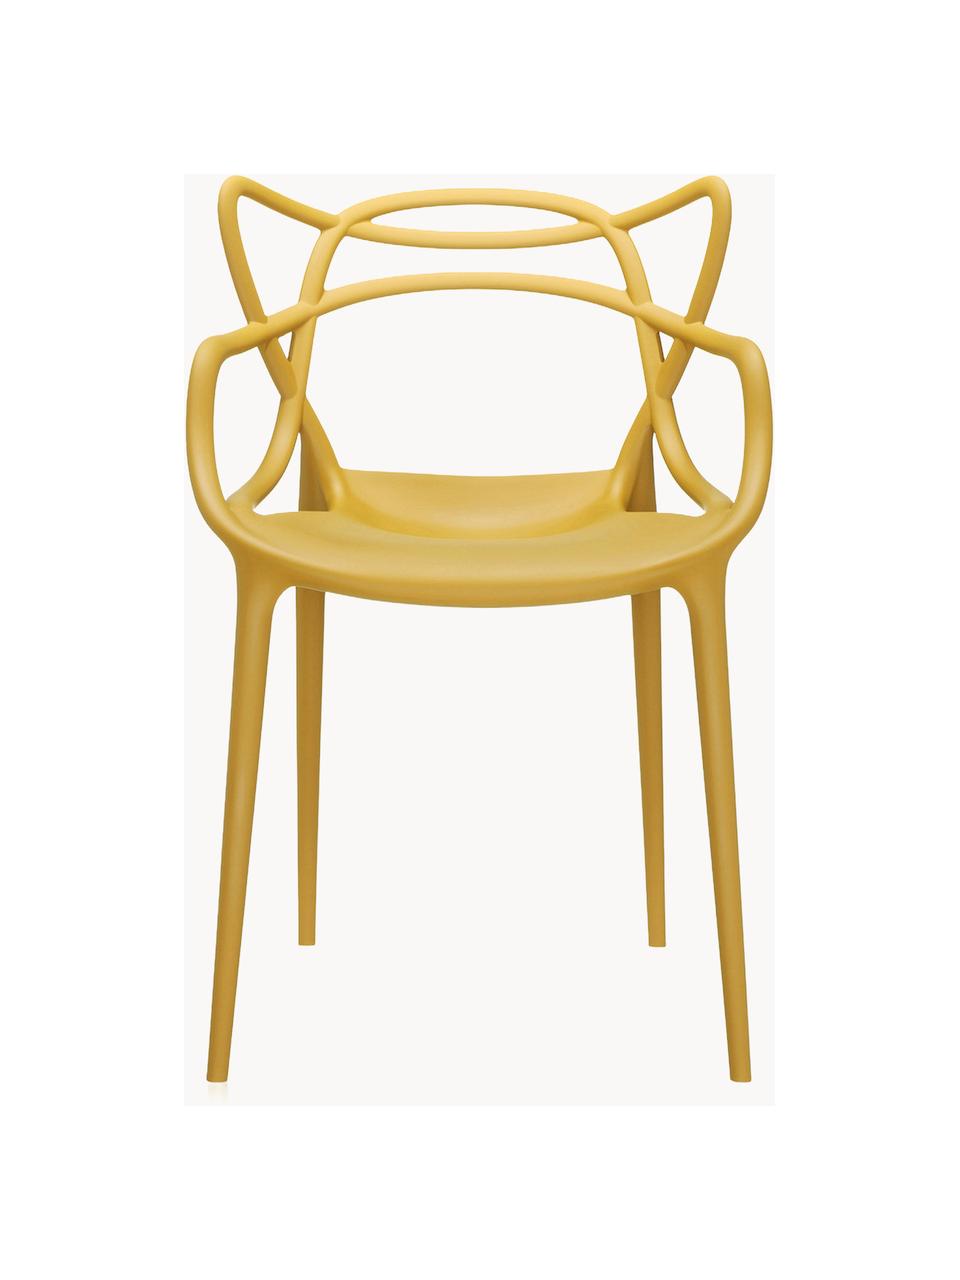 Stolička s opierkami Masters, 2 ks, Plast, Slnečná žltá, Š 57 x H 47 cm